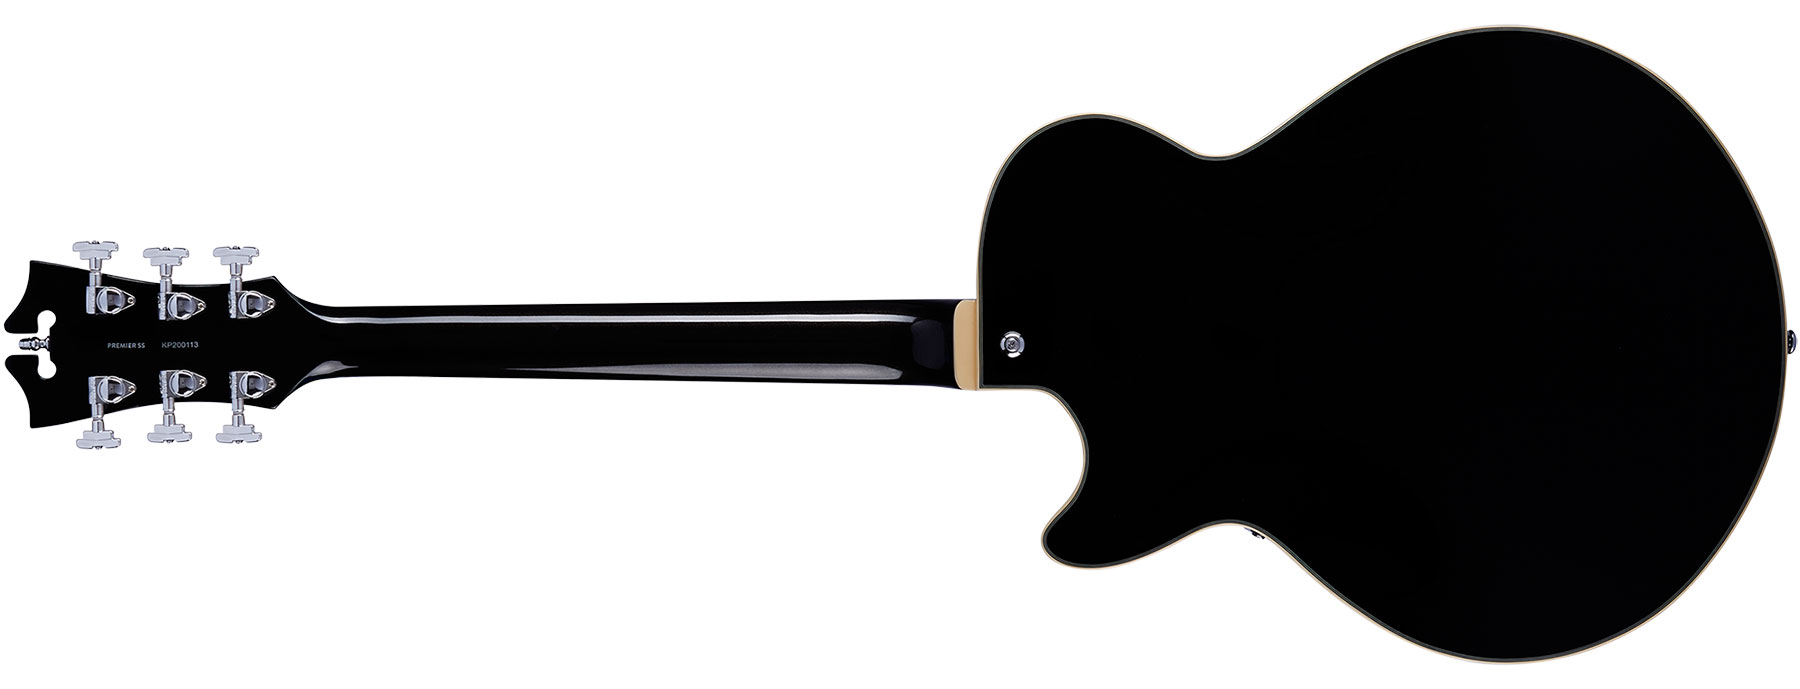 D'angelico Ss Premier 2h Ht Ova - Black Flake - Semi hollow elektriche gitaar - Variation 2